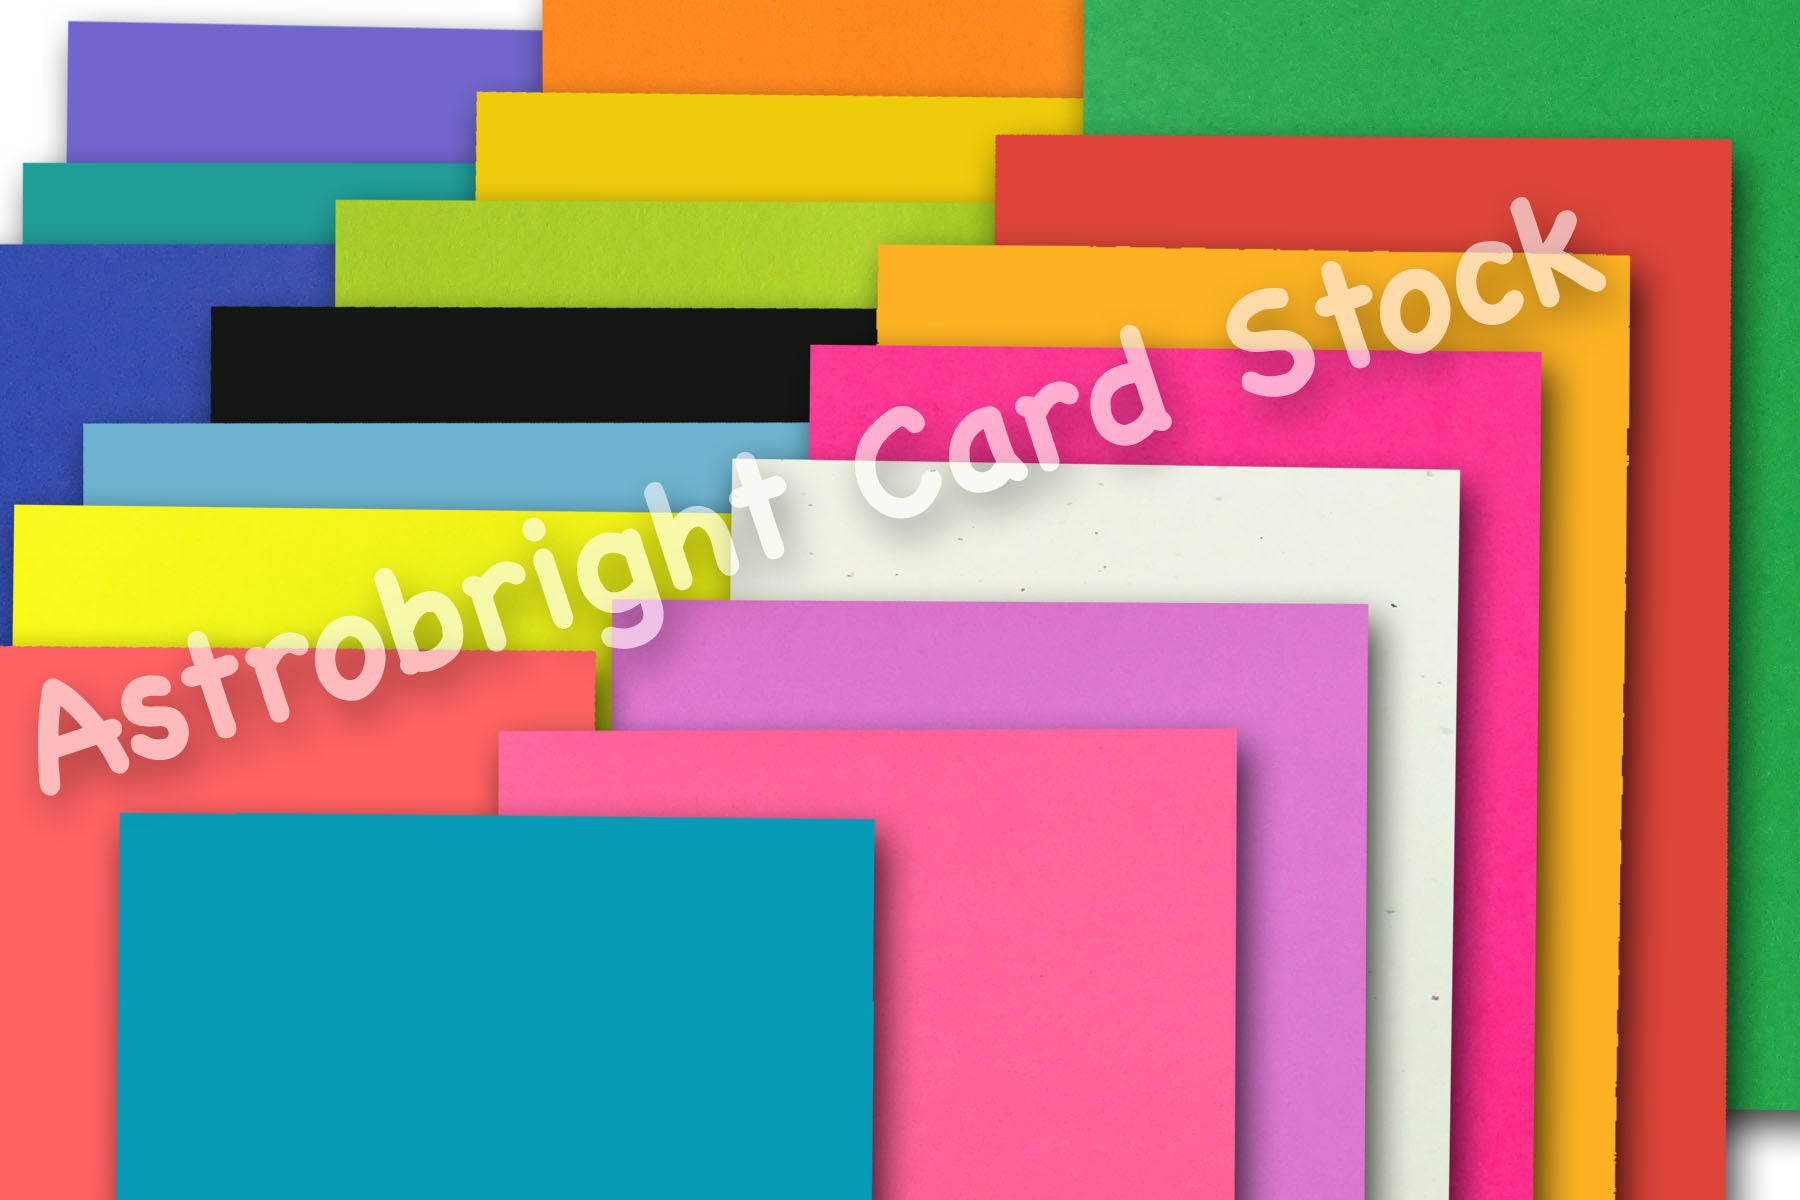 Astrobrights 65 lb. Cardstock Paper, 8.5 x 11, Fireball Fuchsia